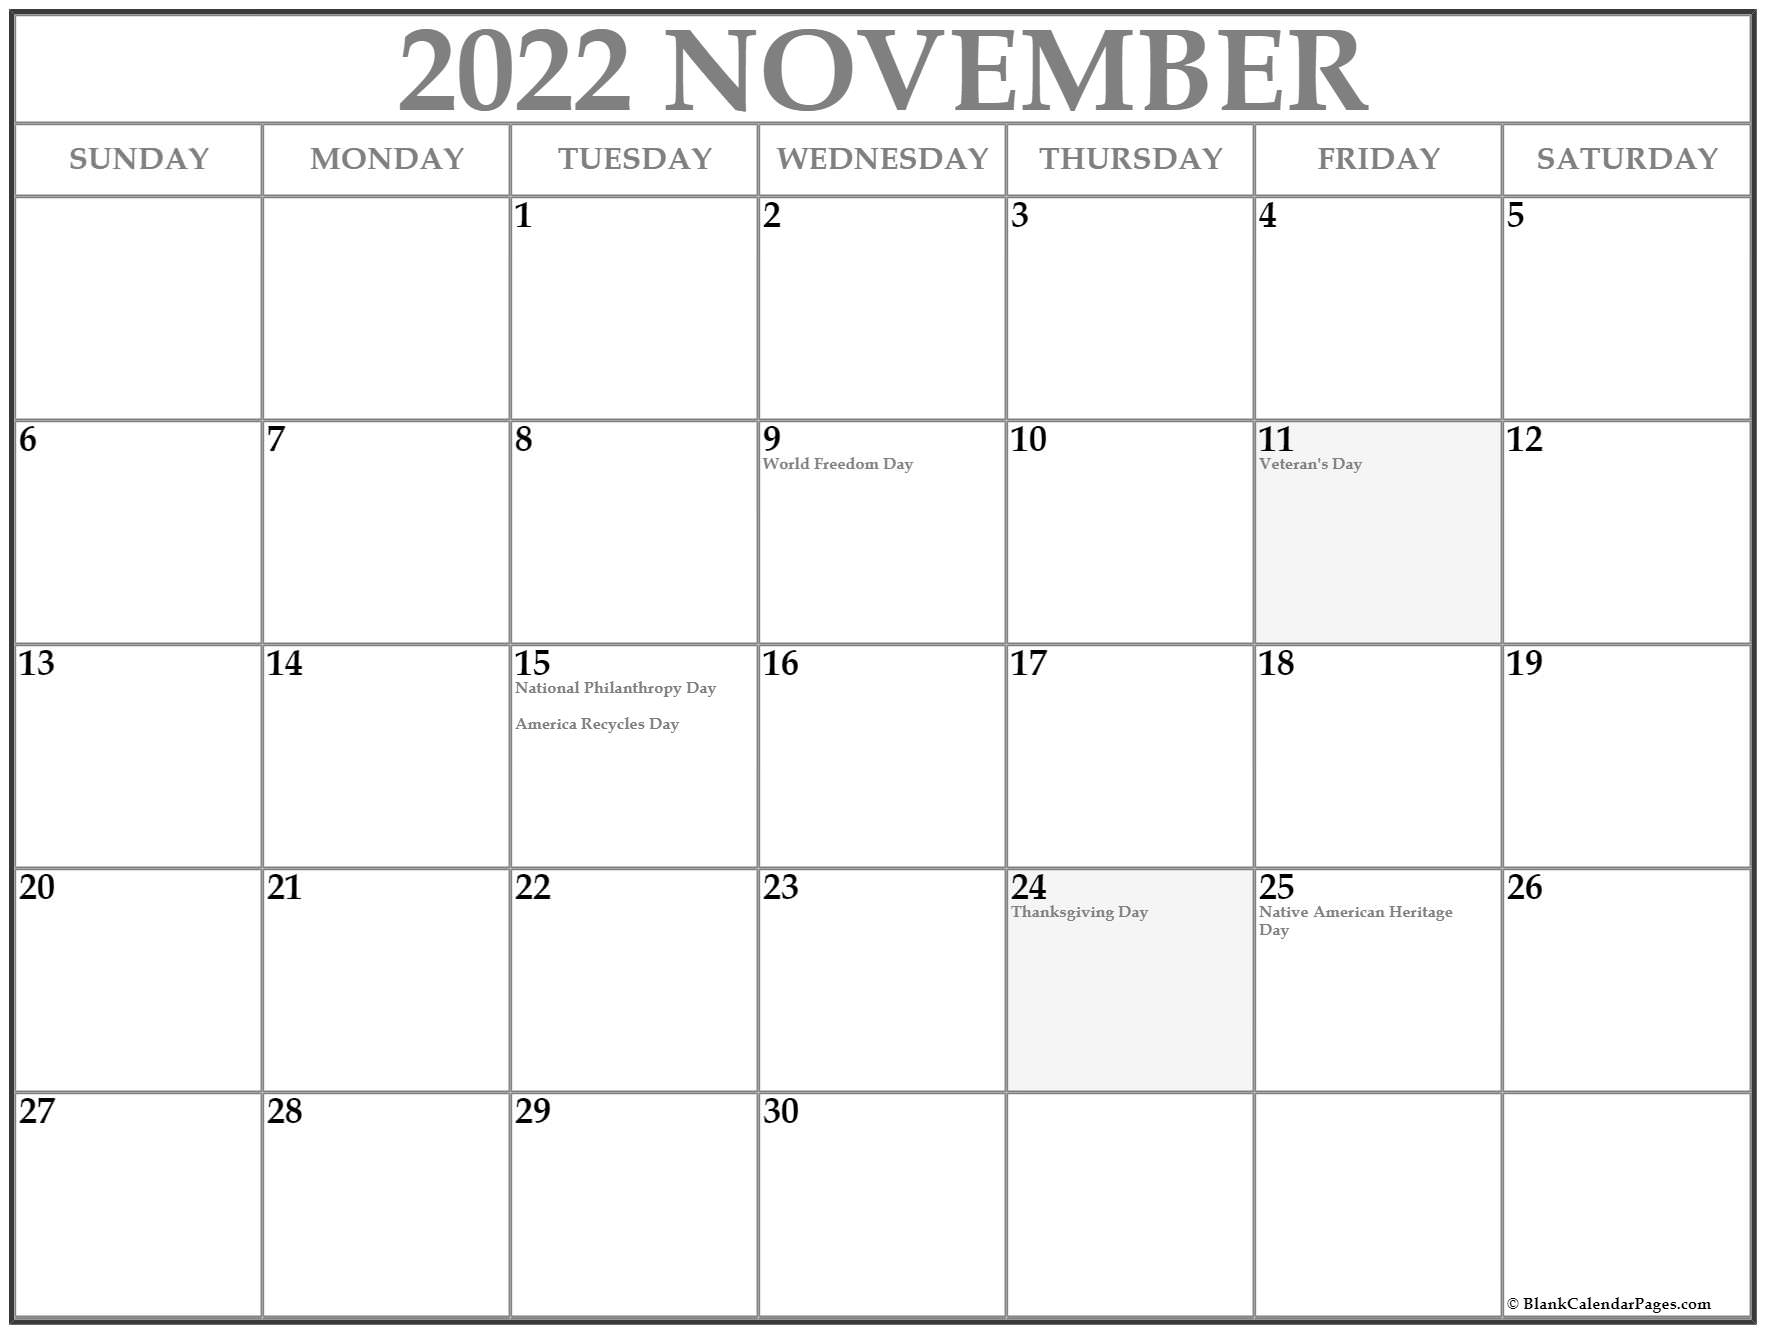 November 2022 Calendar With Holidays